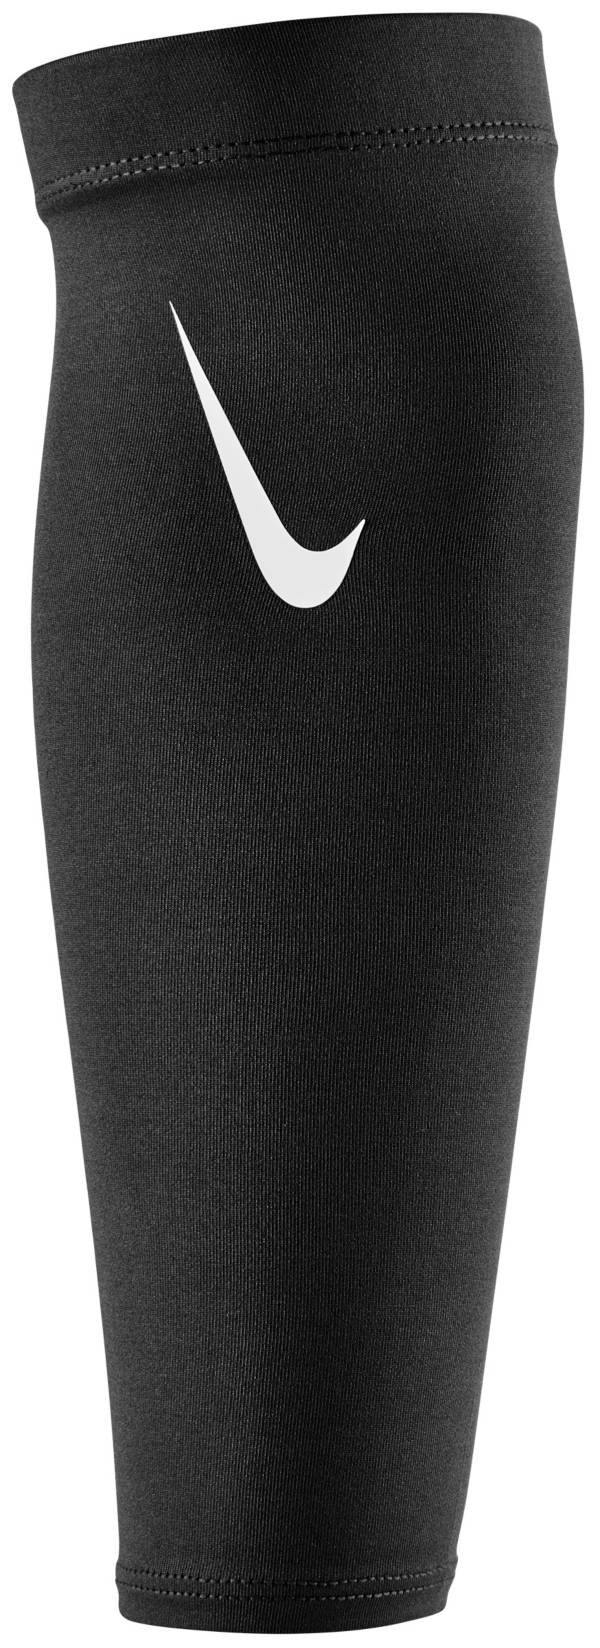 NIKE Pro Adult Dri-FIT 3.0 Arm Sleeves (Black/White, Small/Medium